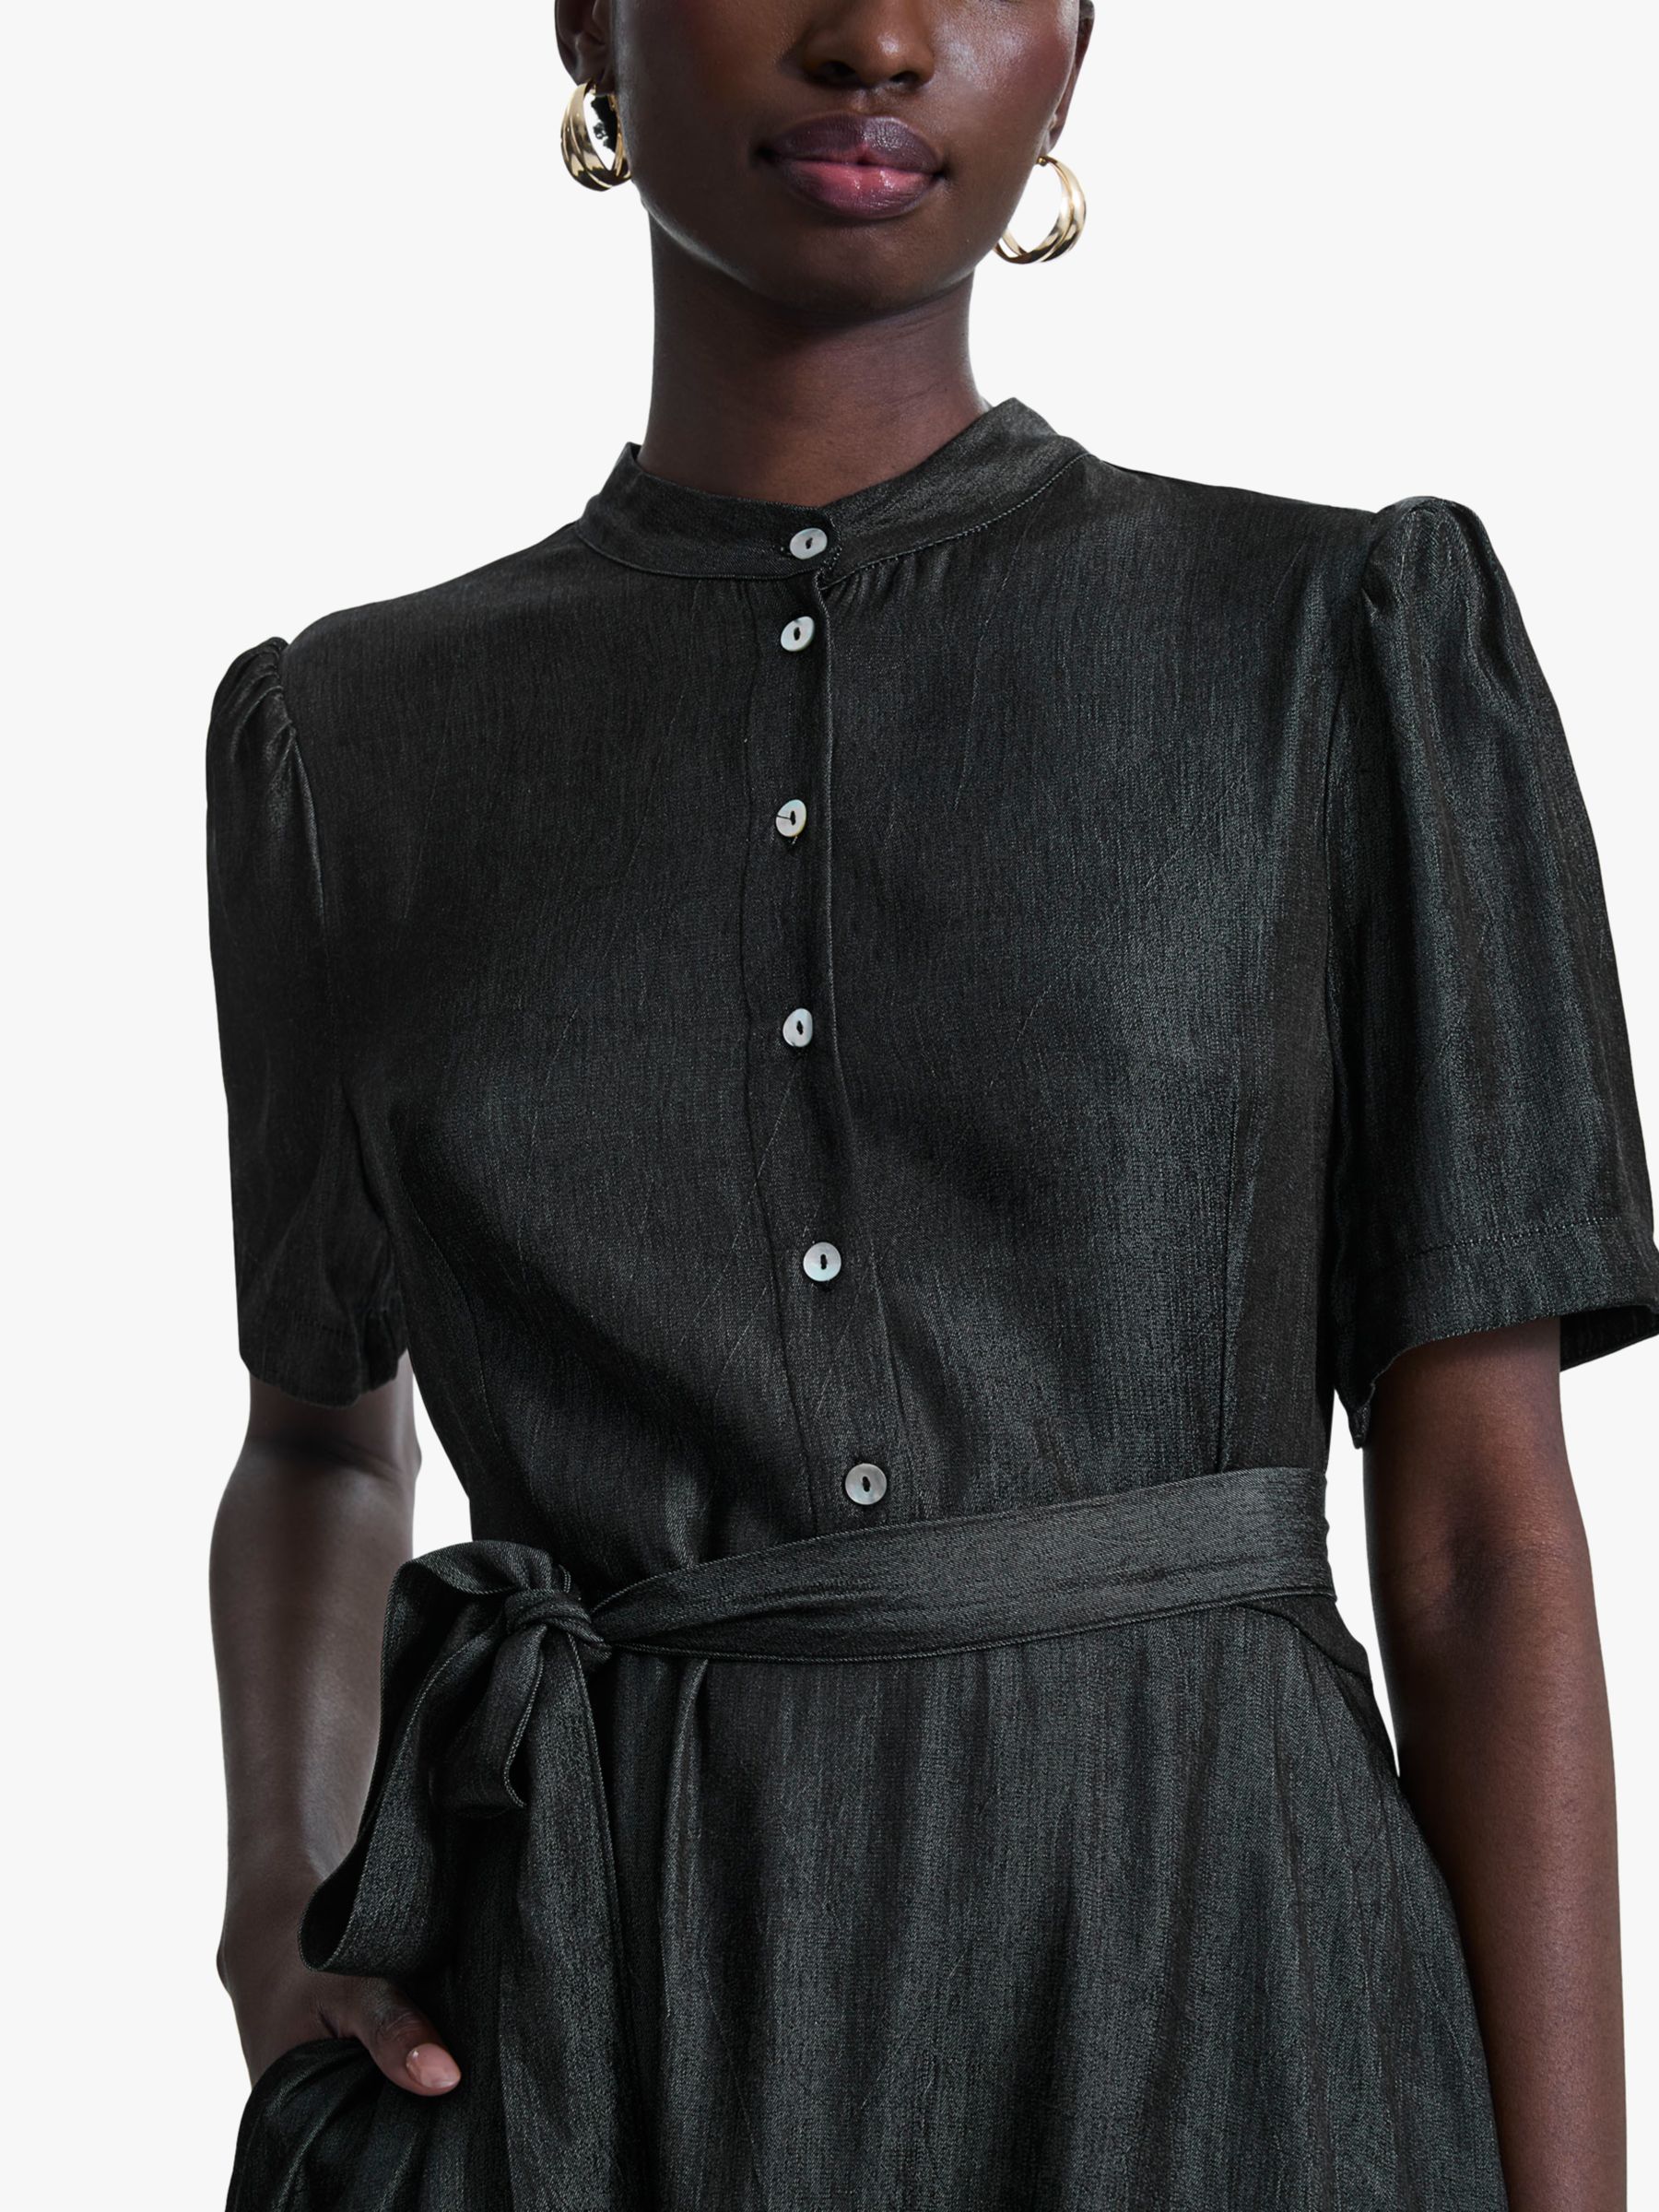 James Lakeland Short Sleeve Midi Day Dress, Black, 8